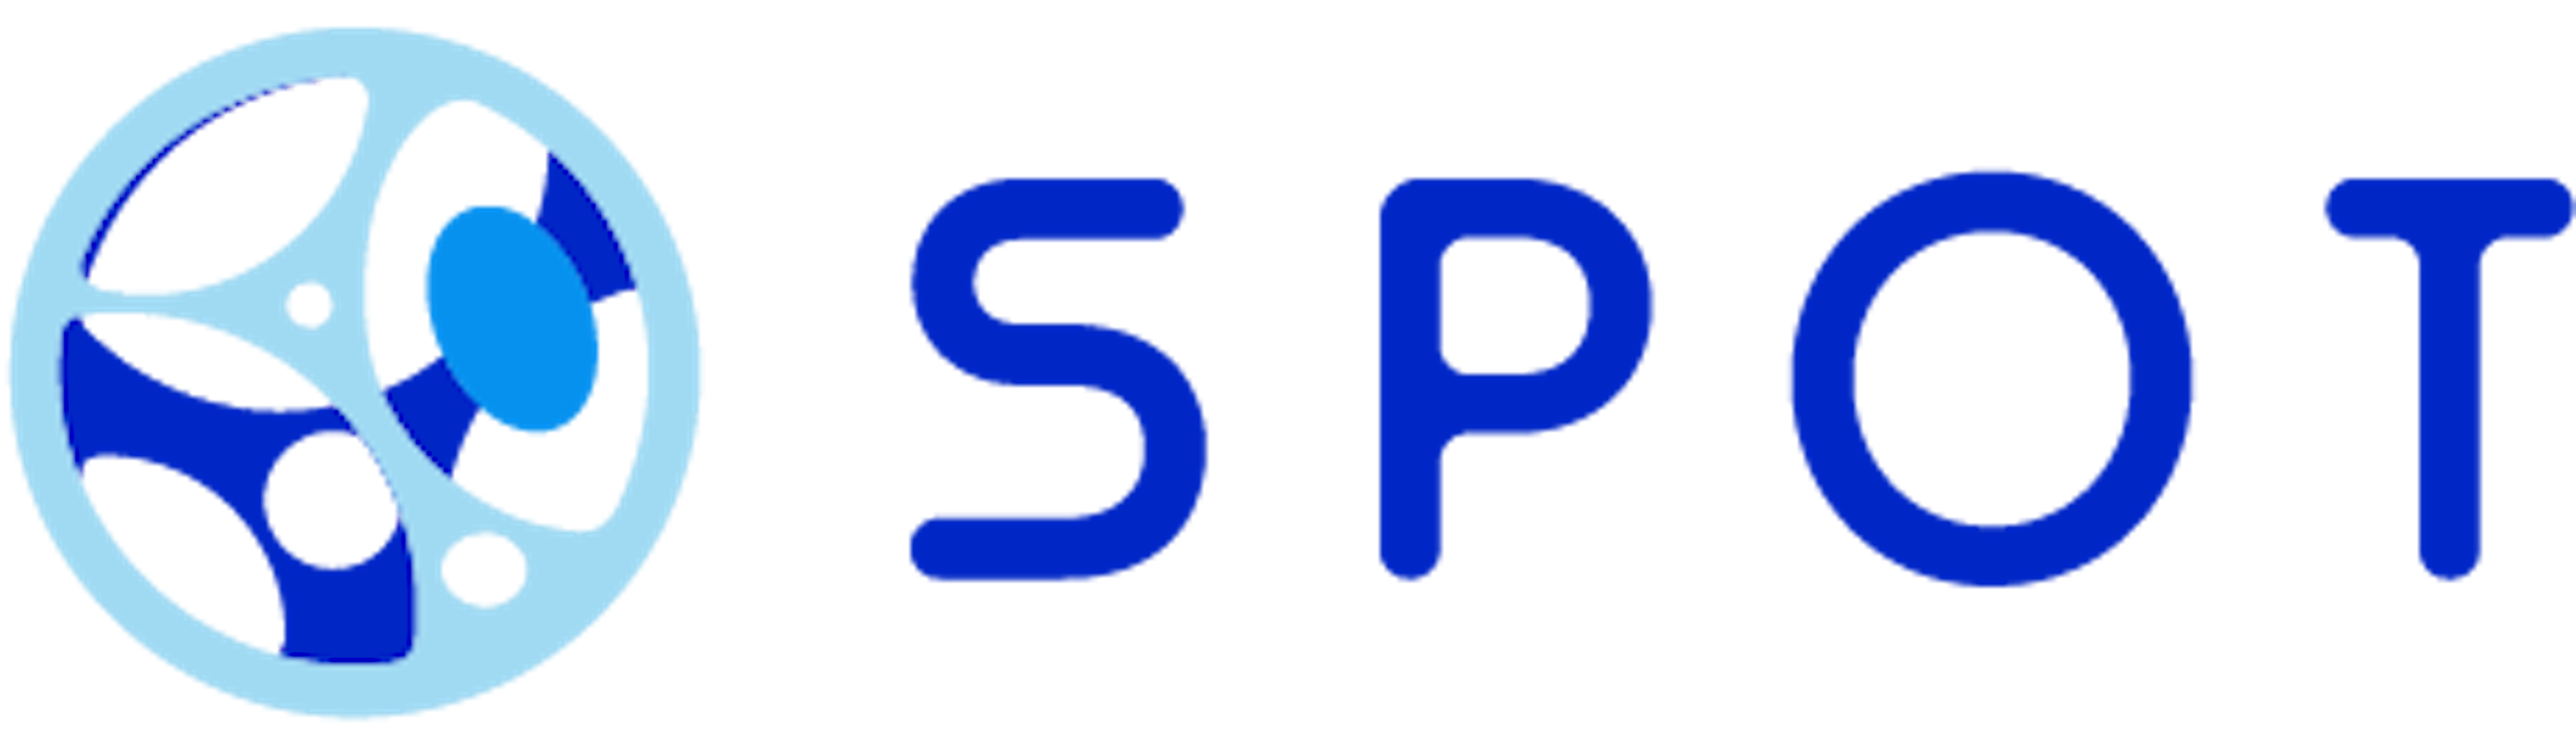 transparent version of spot logo